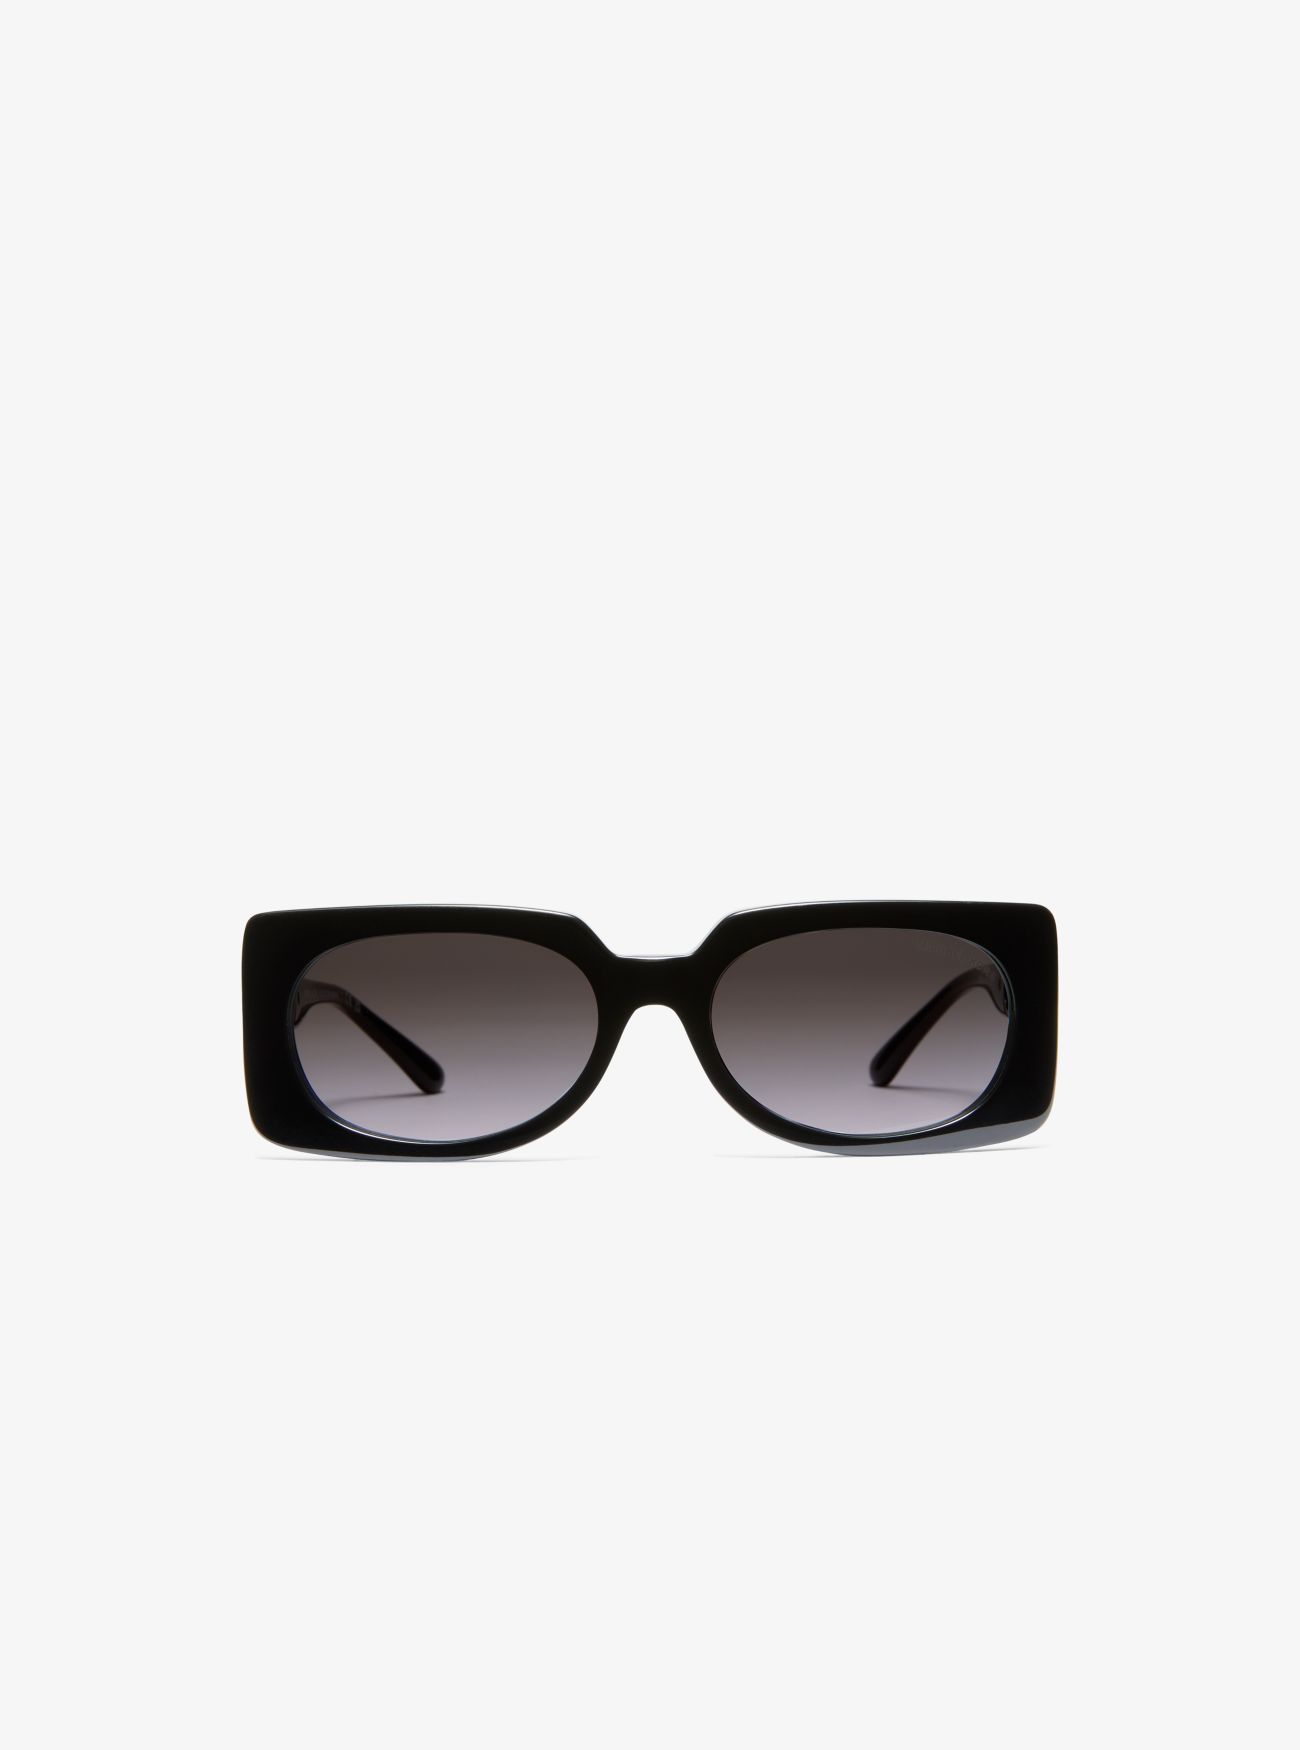 MK Bordeaux Sunglasses - Black - Michael Kors